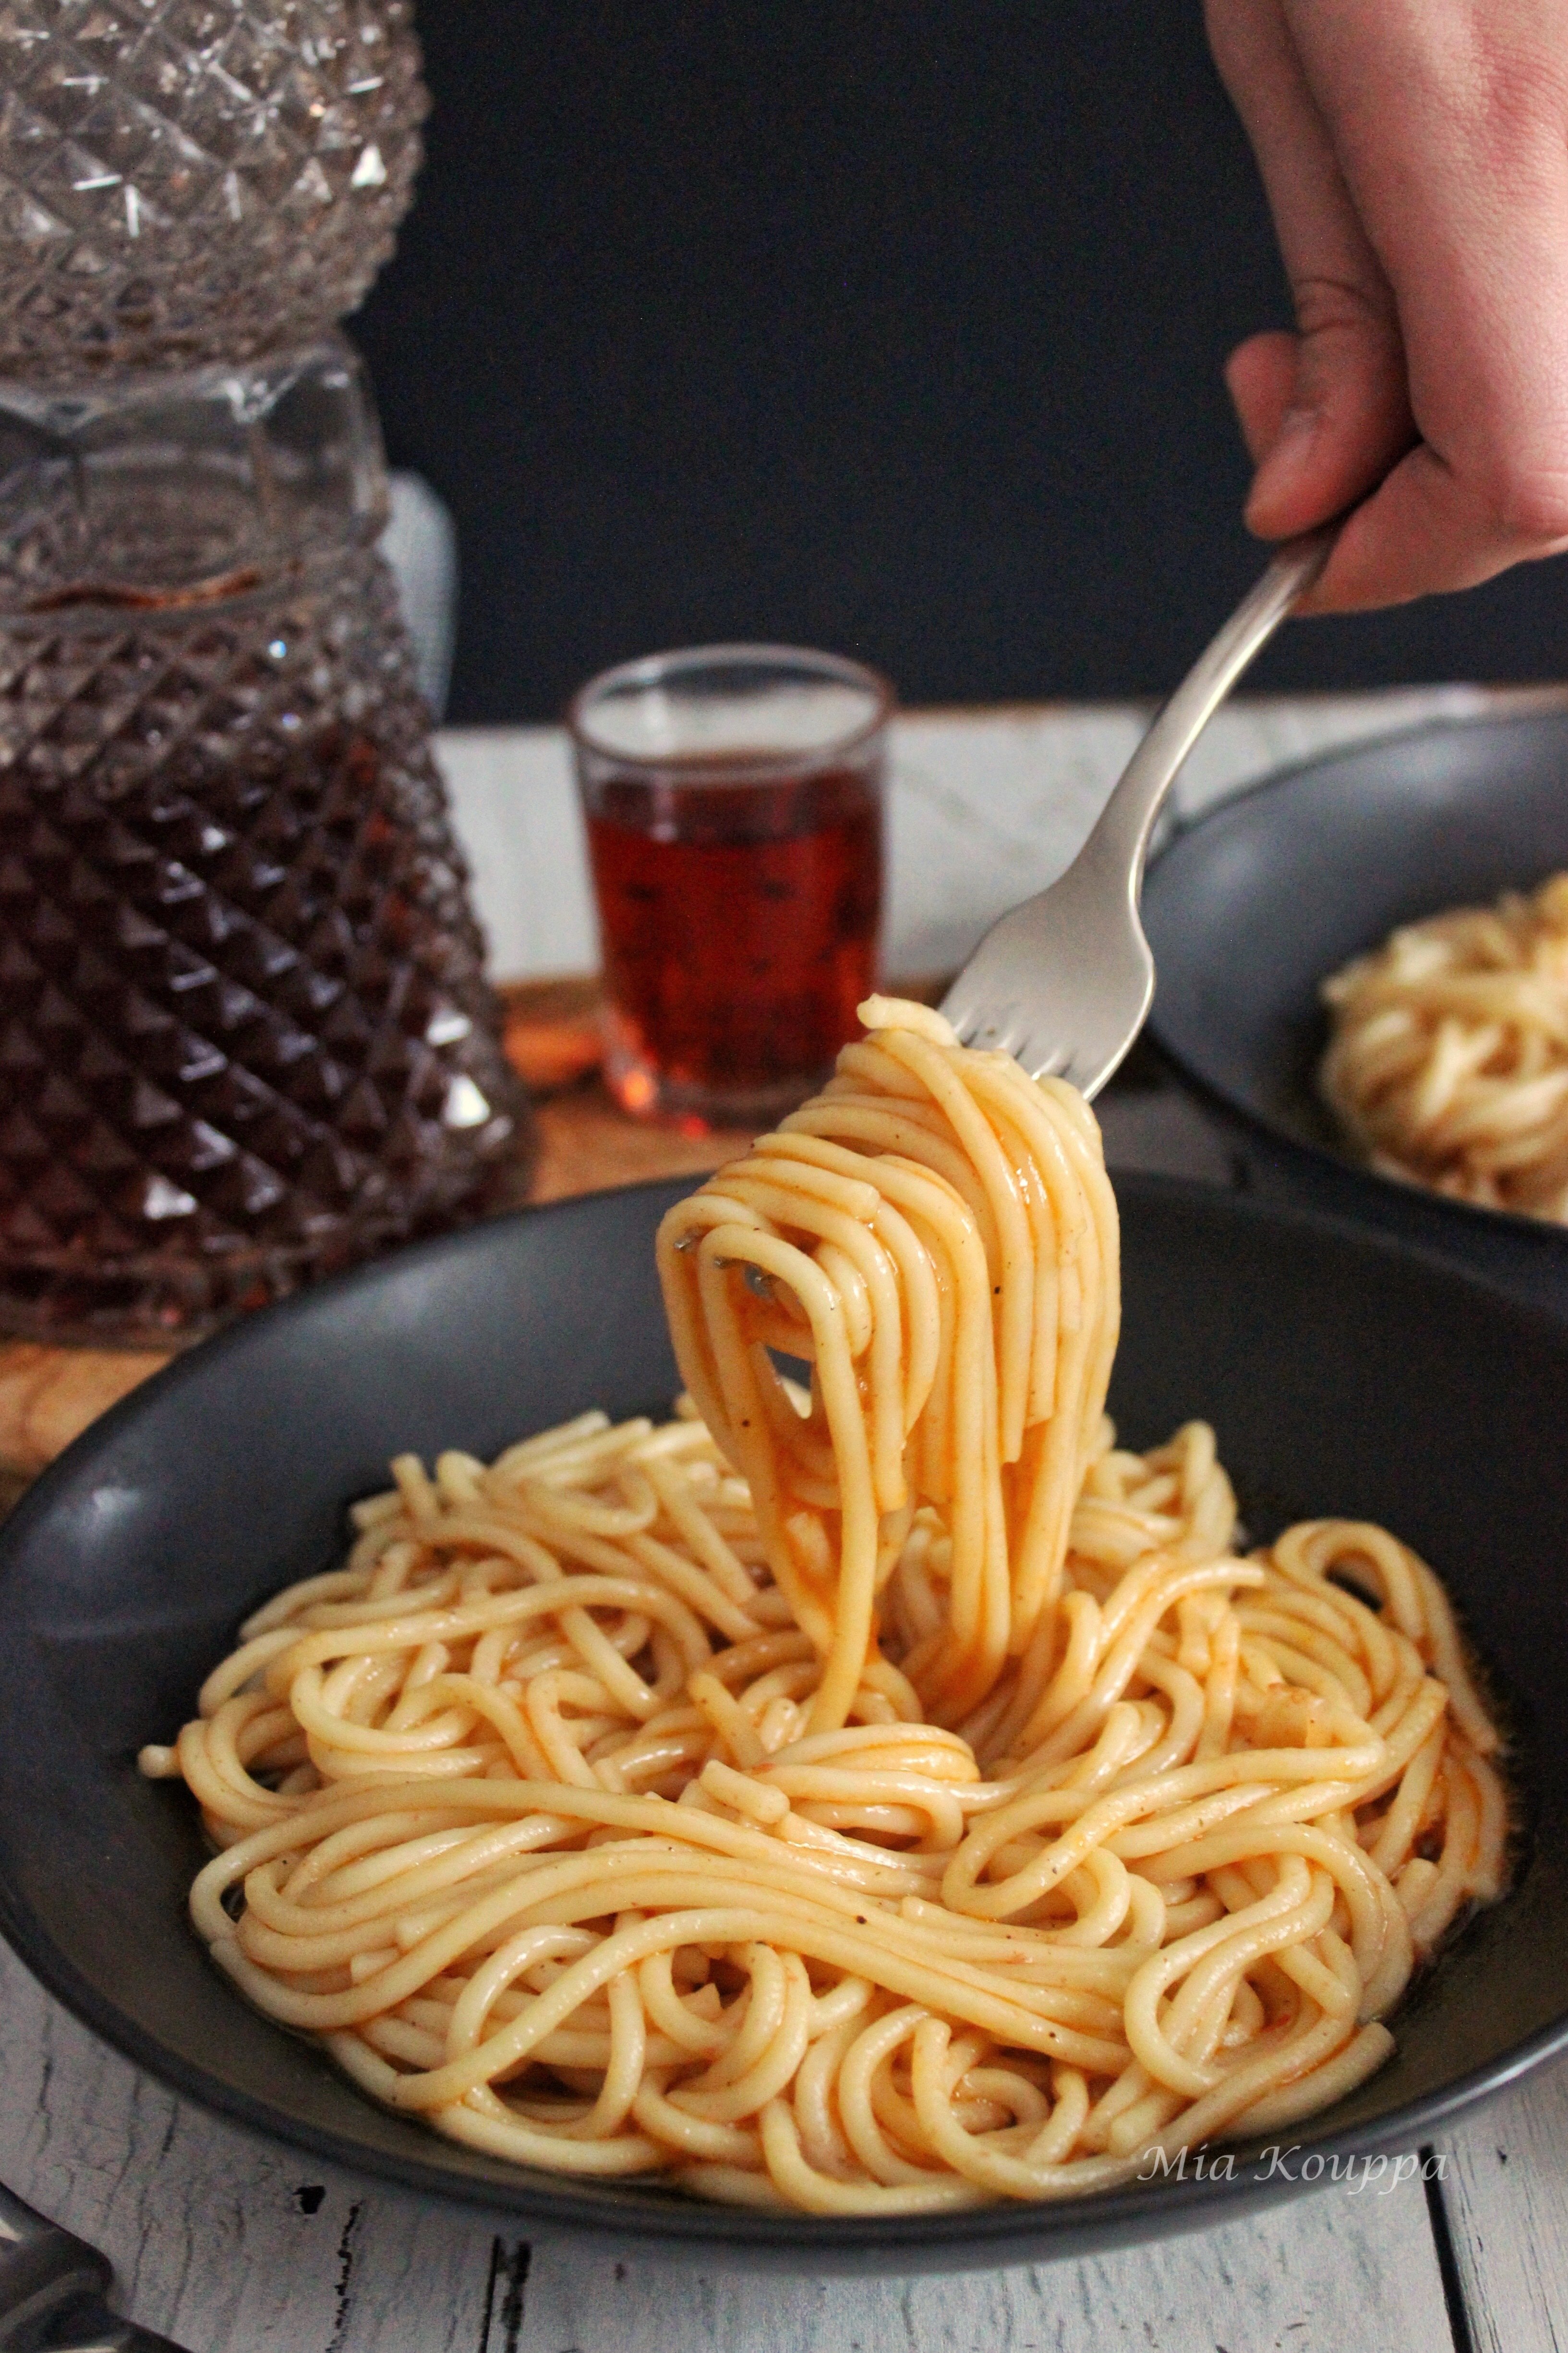 Pasta with tomato sauce (Μακαρόνια με σάλτσα ντομάτας)